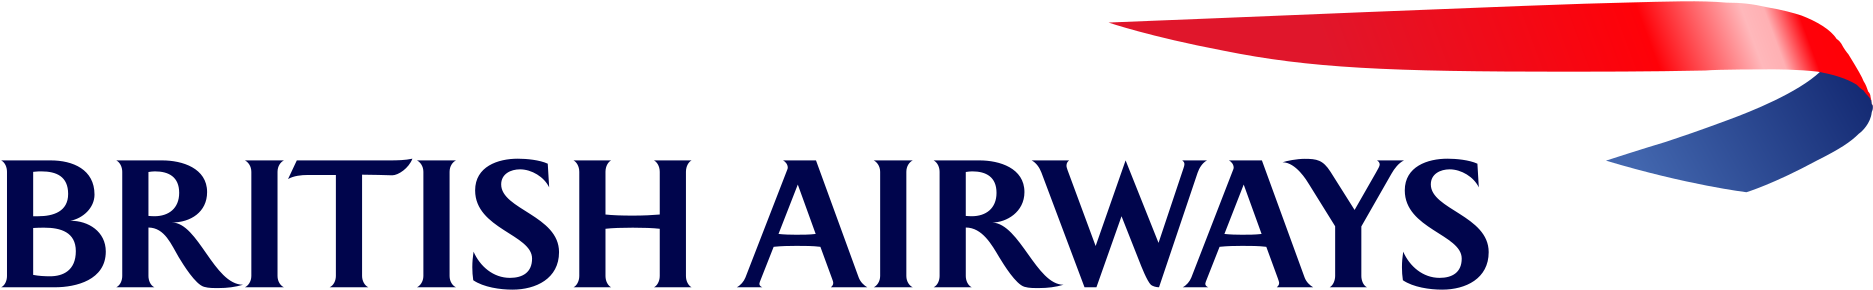 Airways Logo Png Transparent Transparent Background - Heathrow Terminal 5 Station (2000x417)